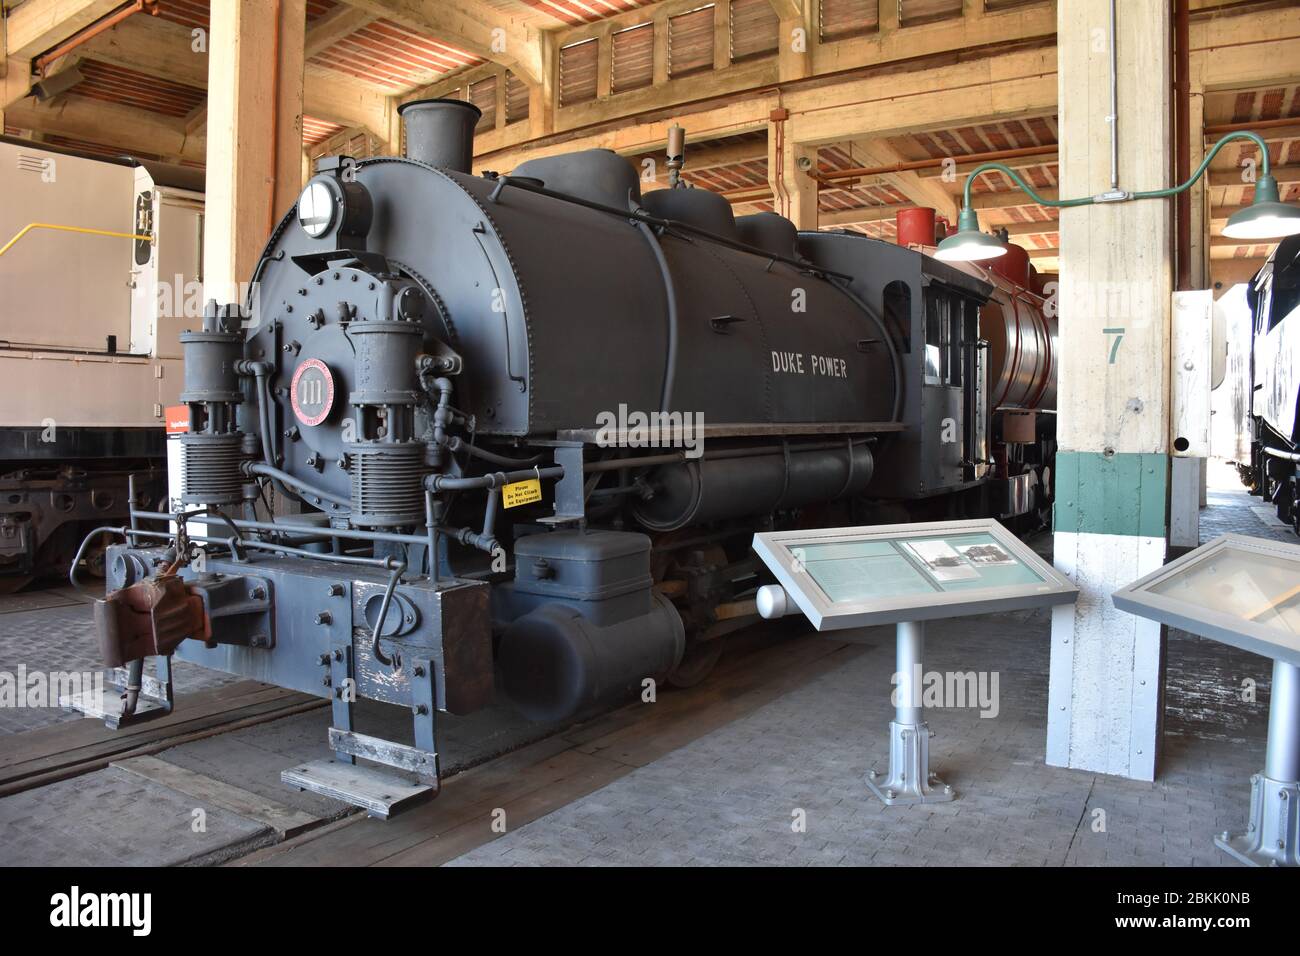 A Steam Locomotive on display at the North Carolina Transportation Museum. Stock Photo